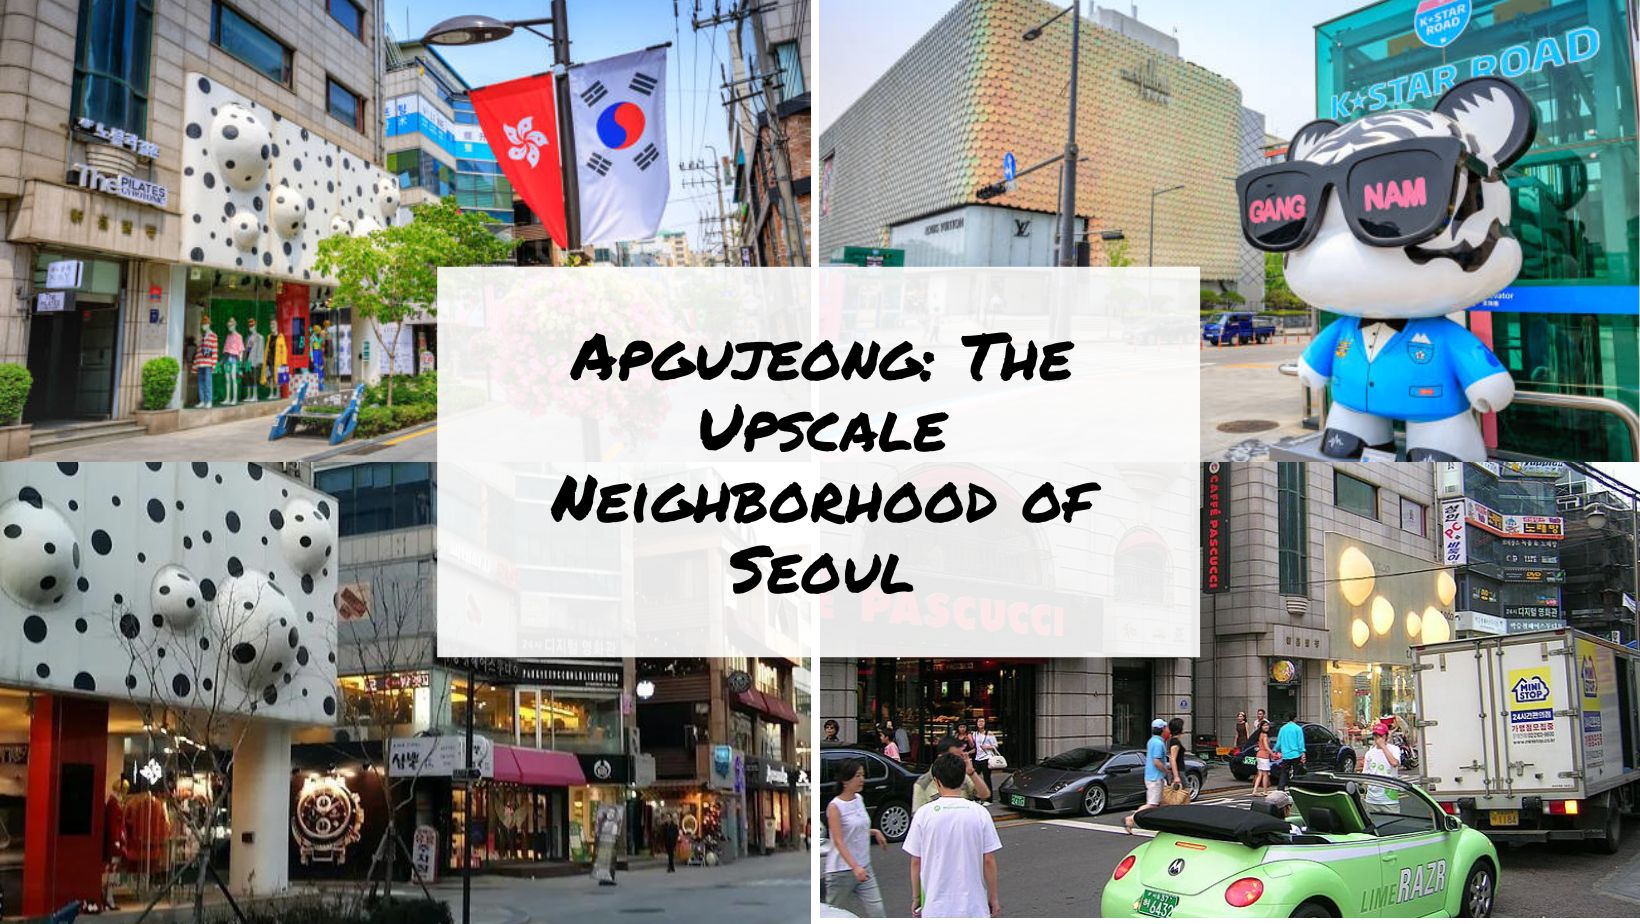 Apgujeong The Upscale Neighborhood of Seoul